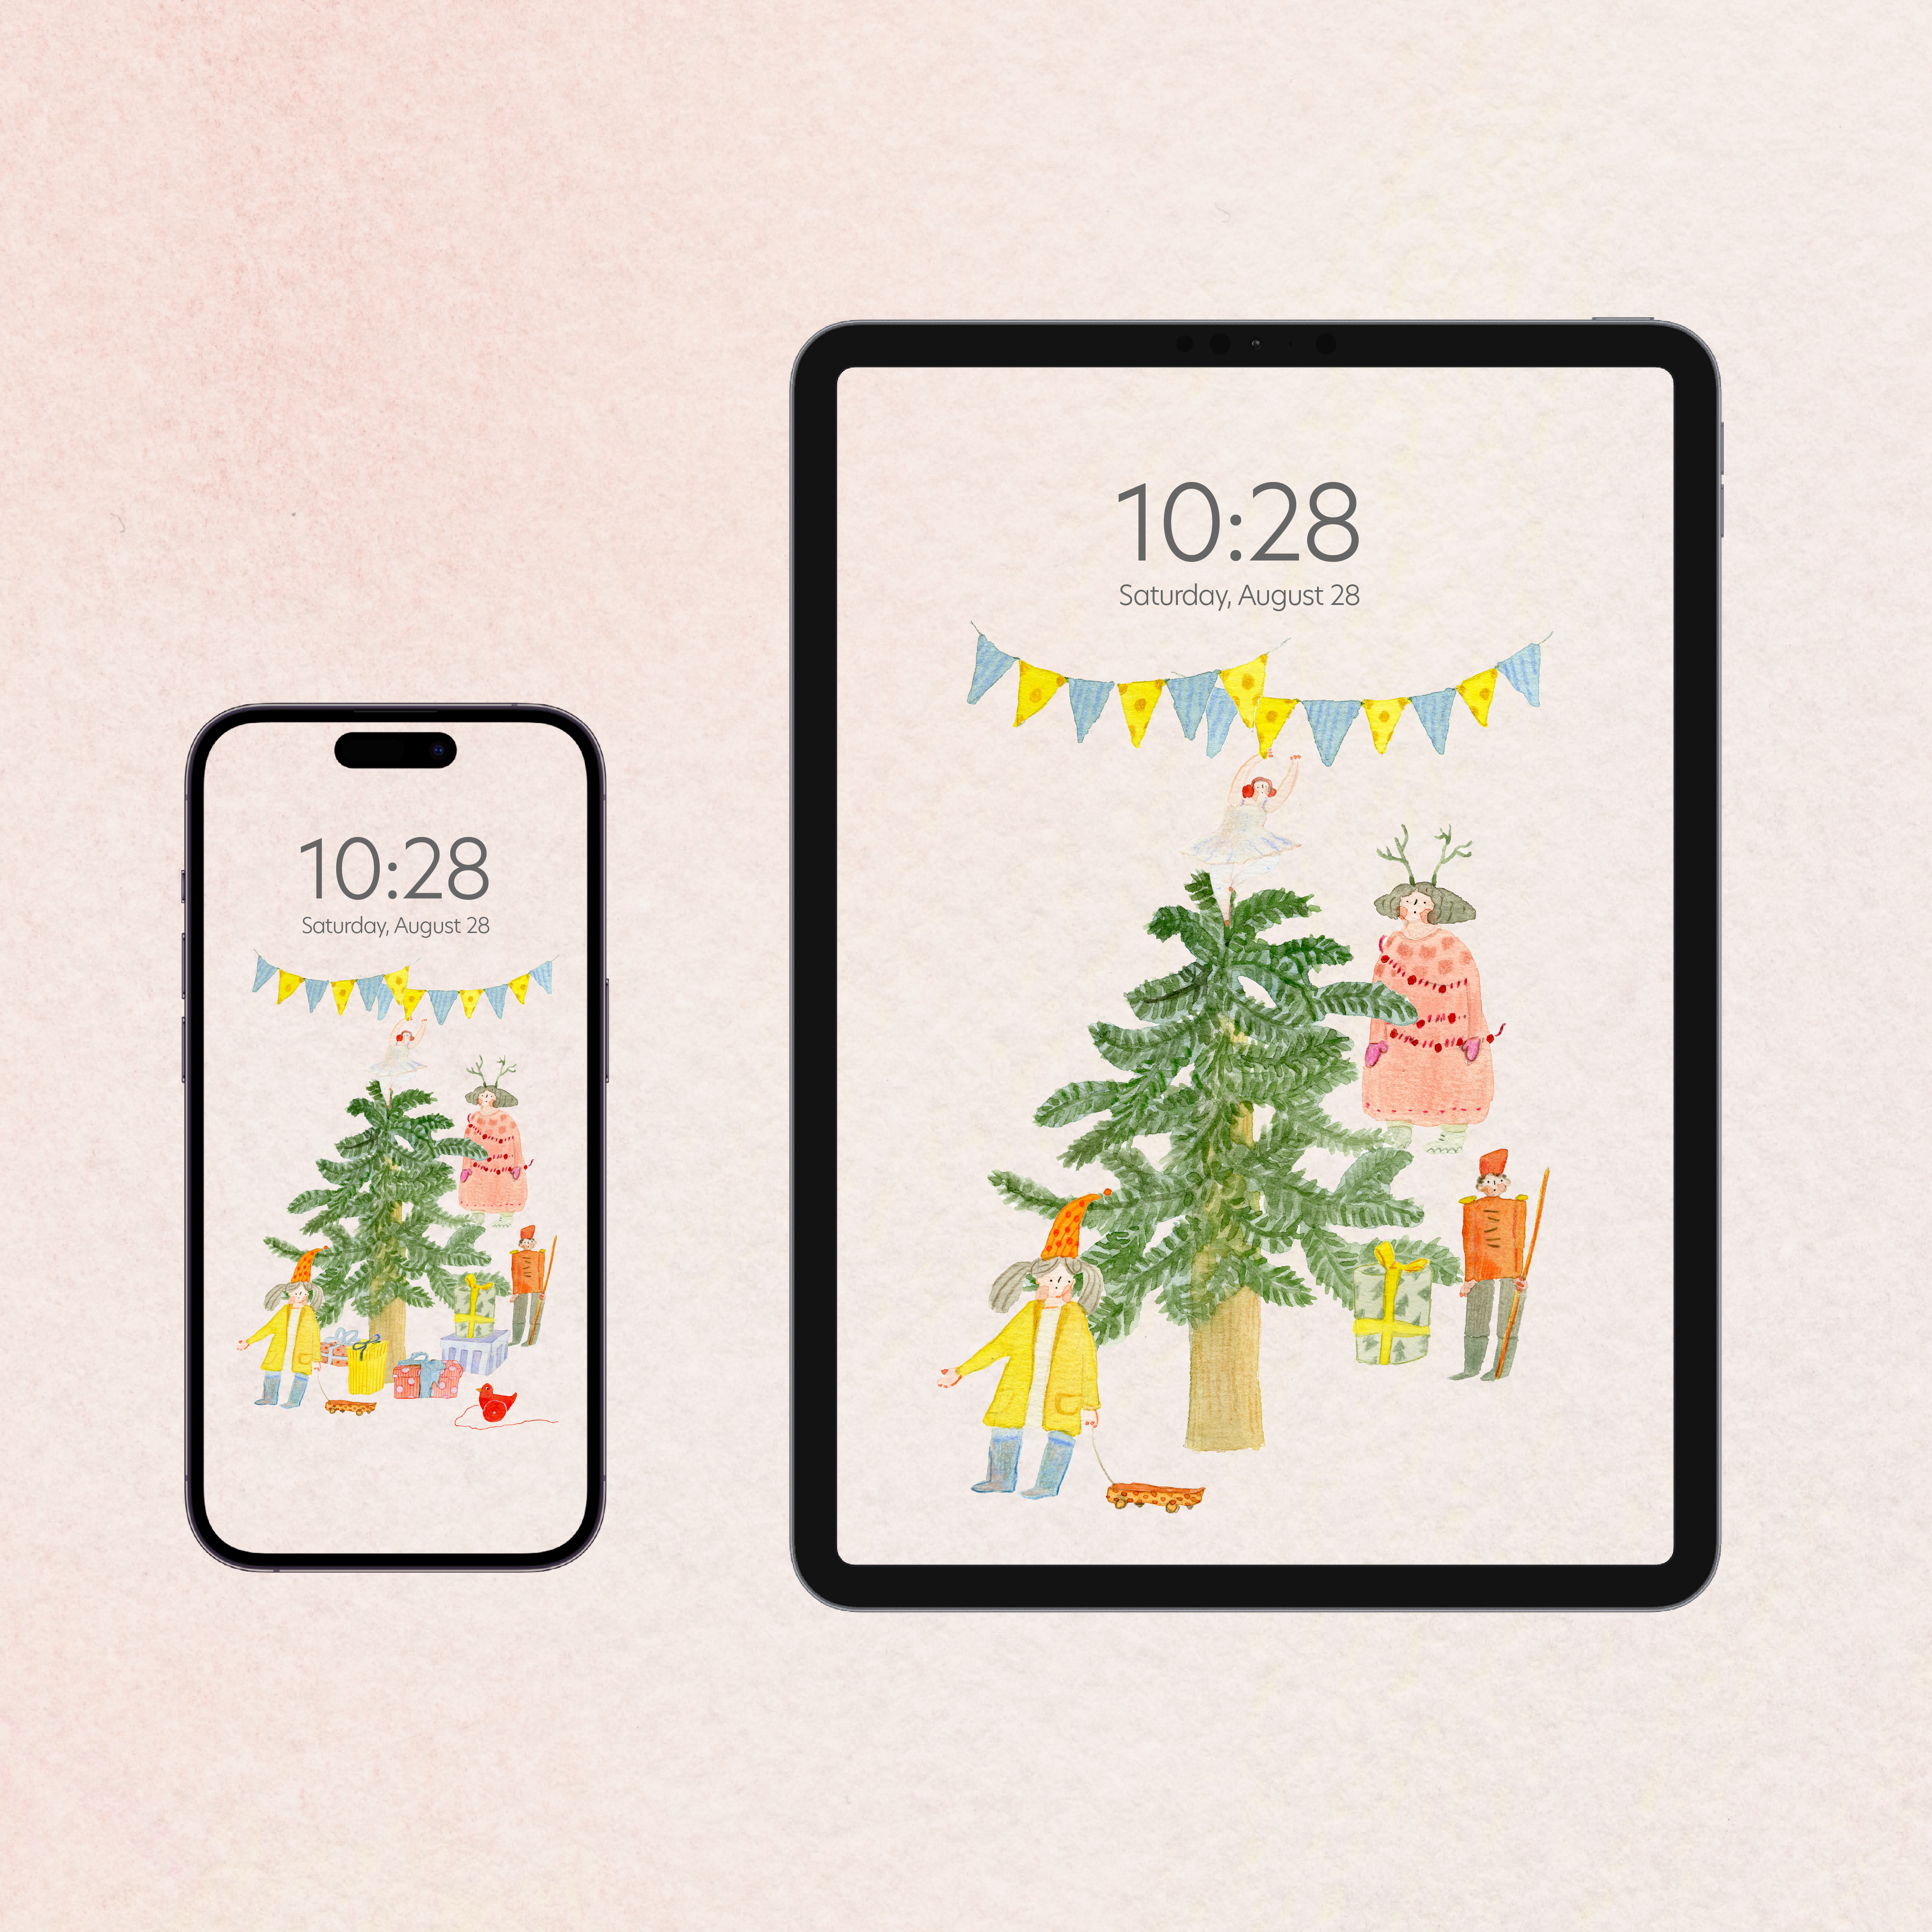 cute christmas wallpaper iphone